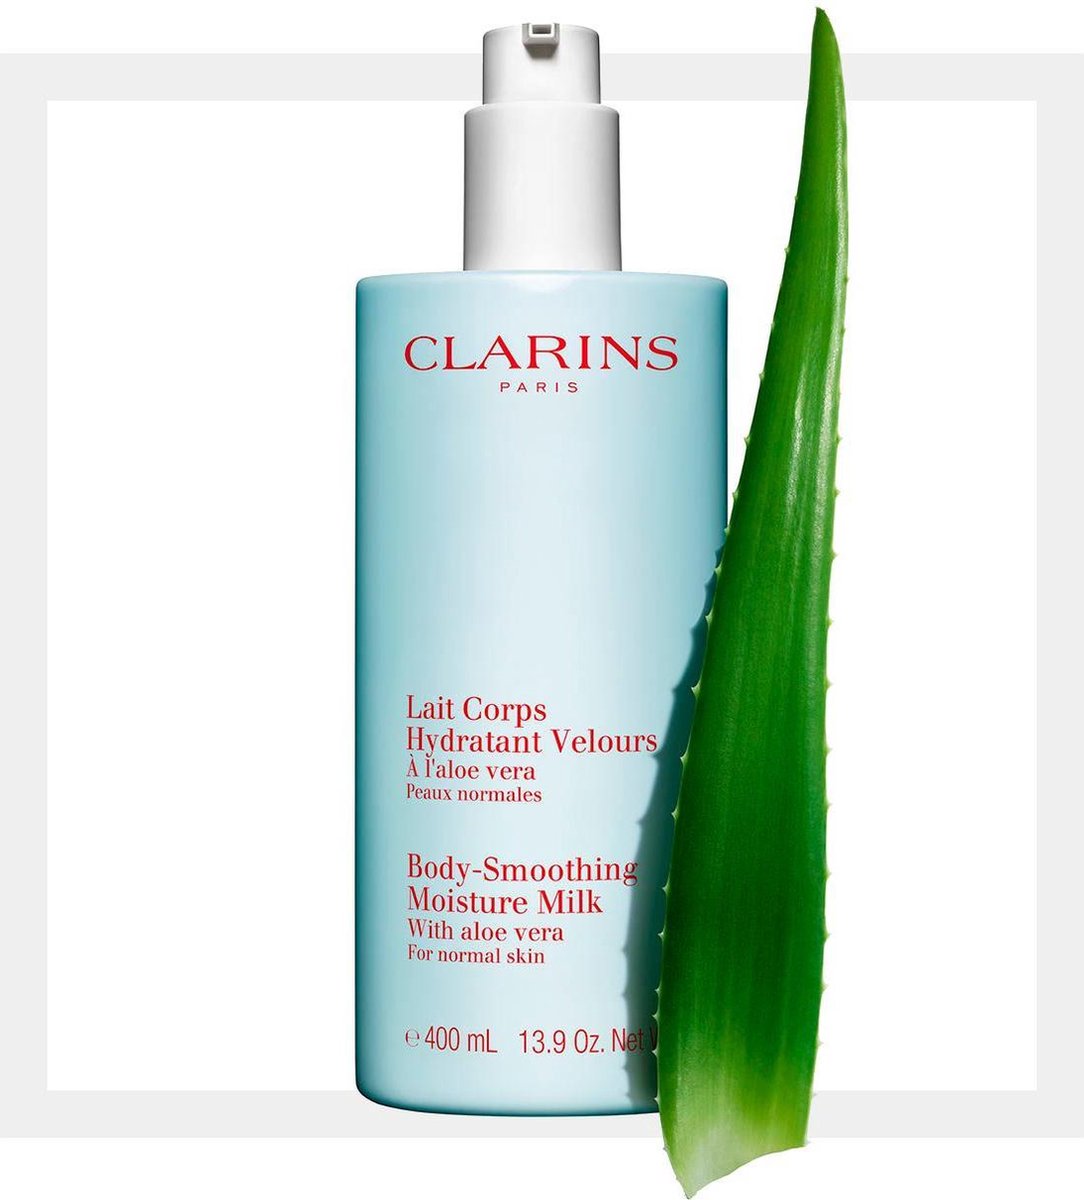 Clarins Body-Smoothing Moisture Milk Bodylotion - 400 ml - Clarins